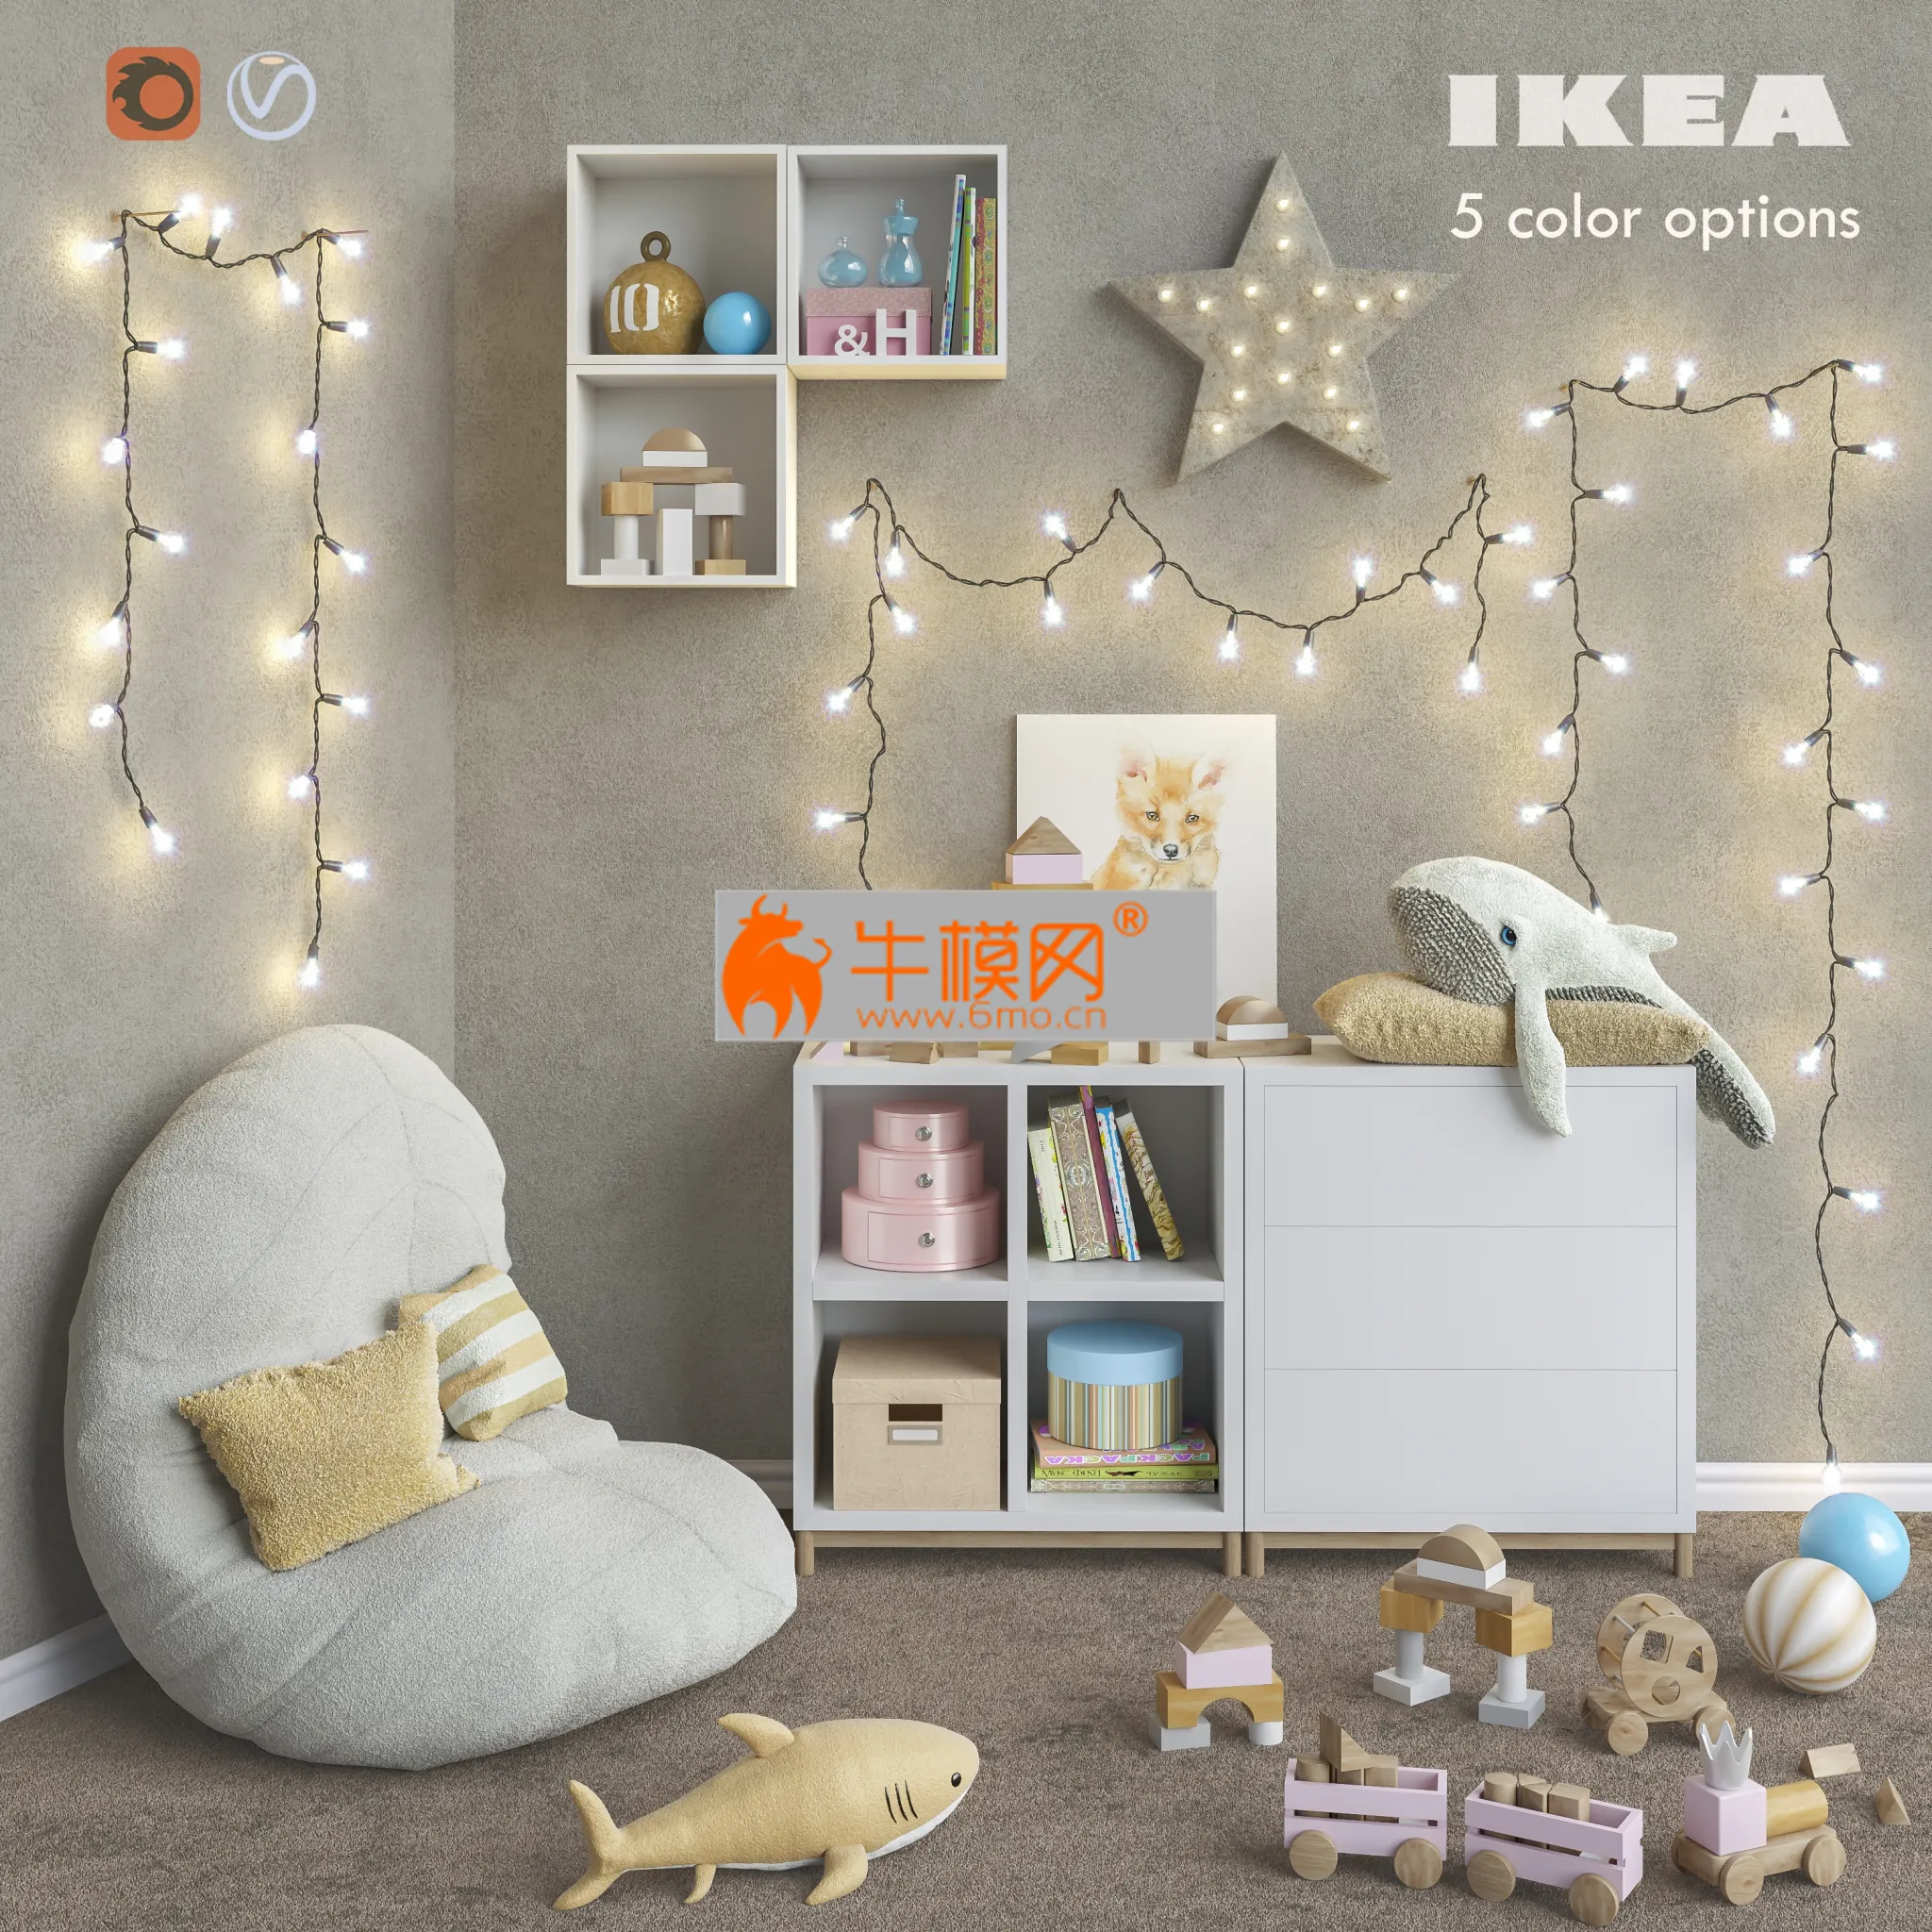 IKEA-modular-furniture-accessories-decor-and-toys-set-6 – 5033